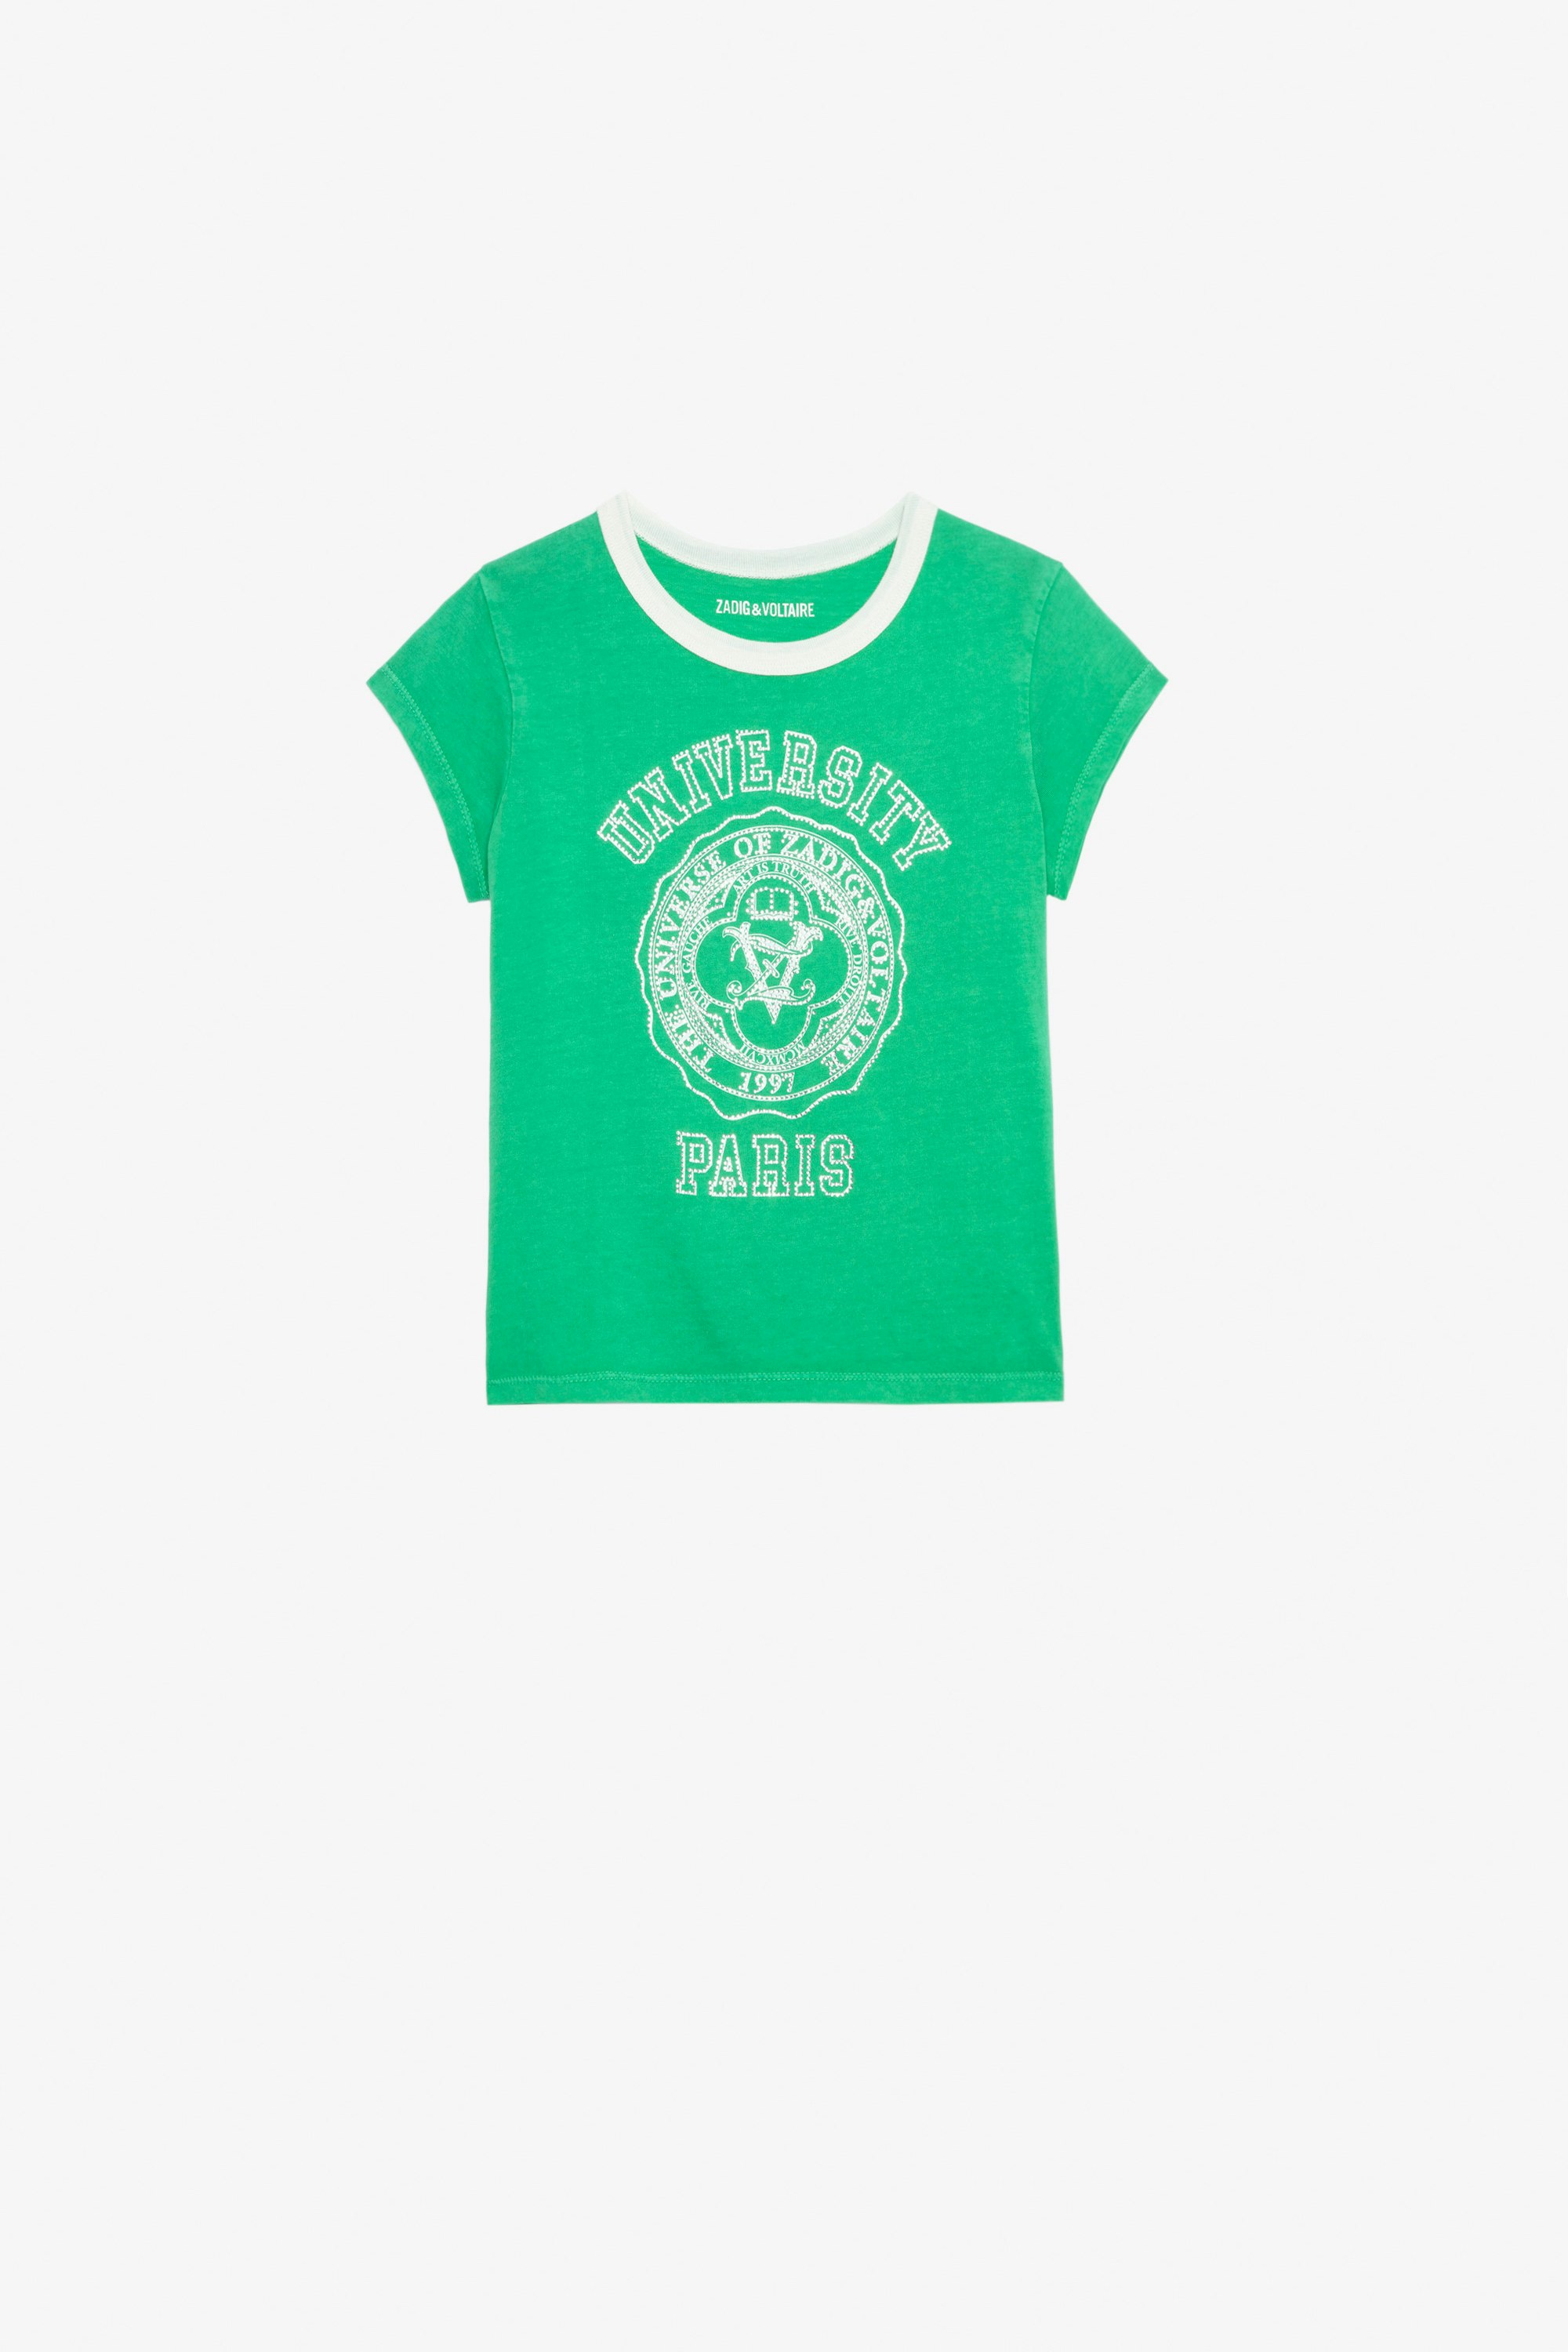 Camiseta Niels Niña - Camiseta verde de punto de algodón de manga corta con strass y motivo universitario para niña.